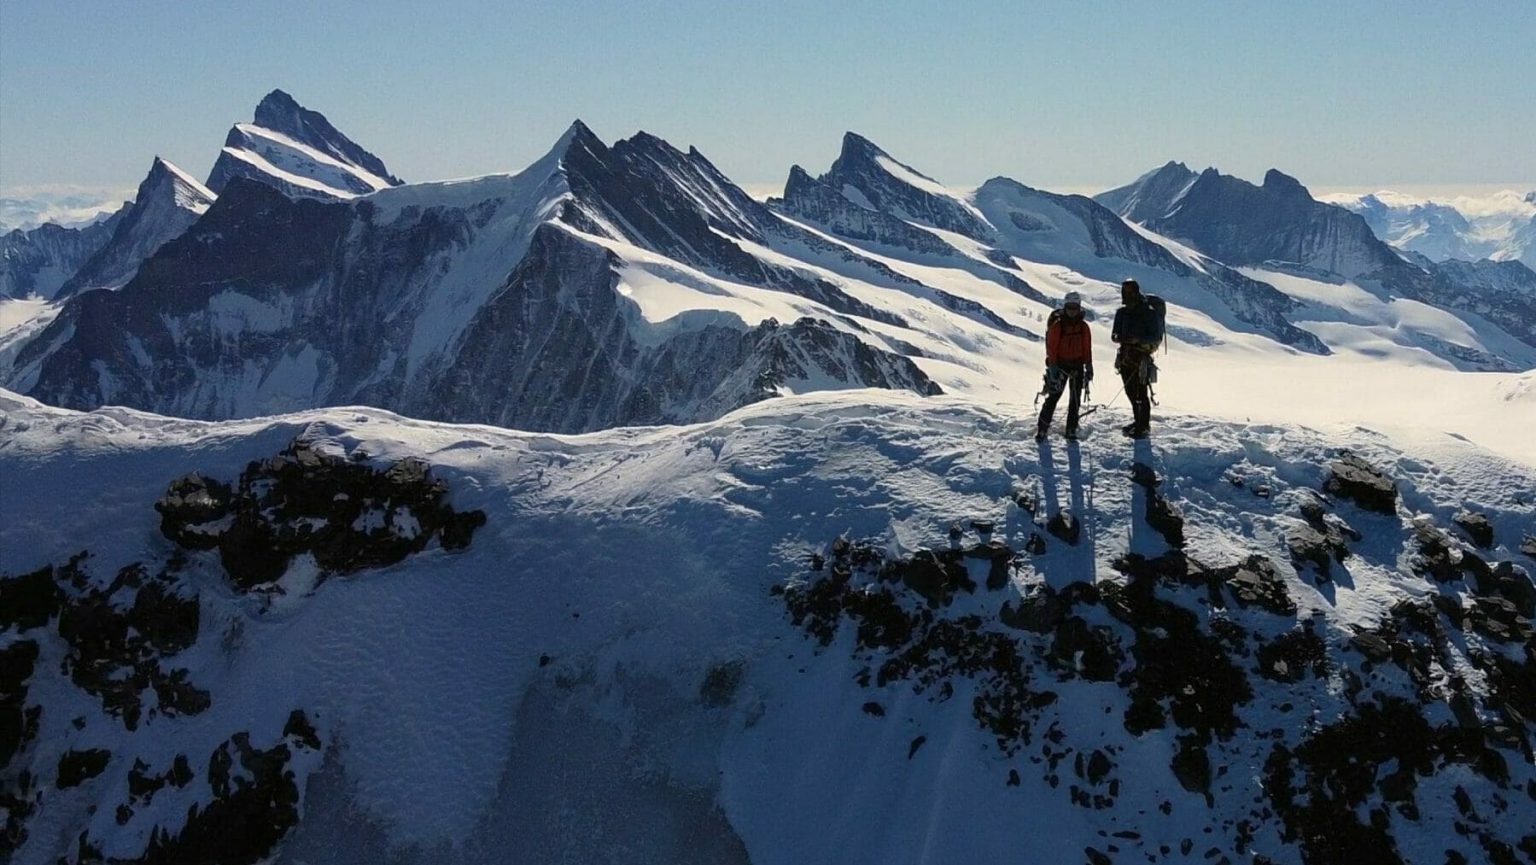 The Narrow-Ridged Summit of The Eiger